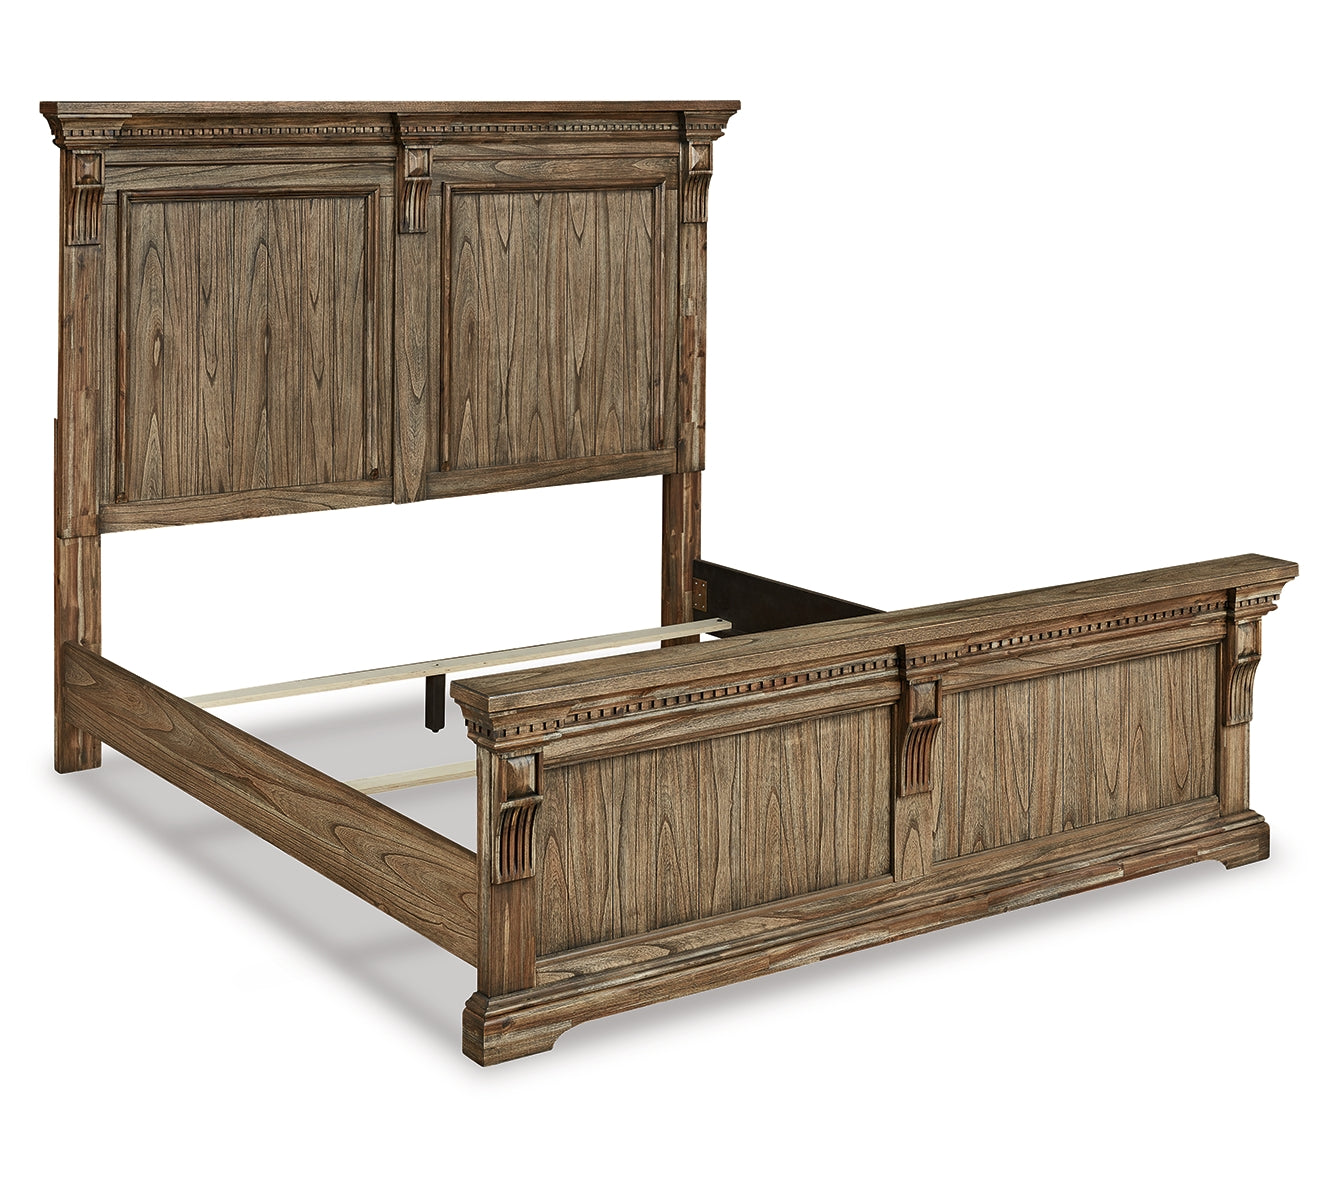 Markenburg Queen Panel Bed with Dresser